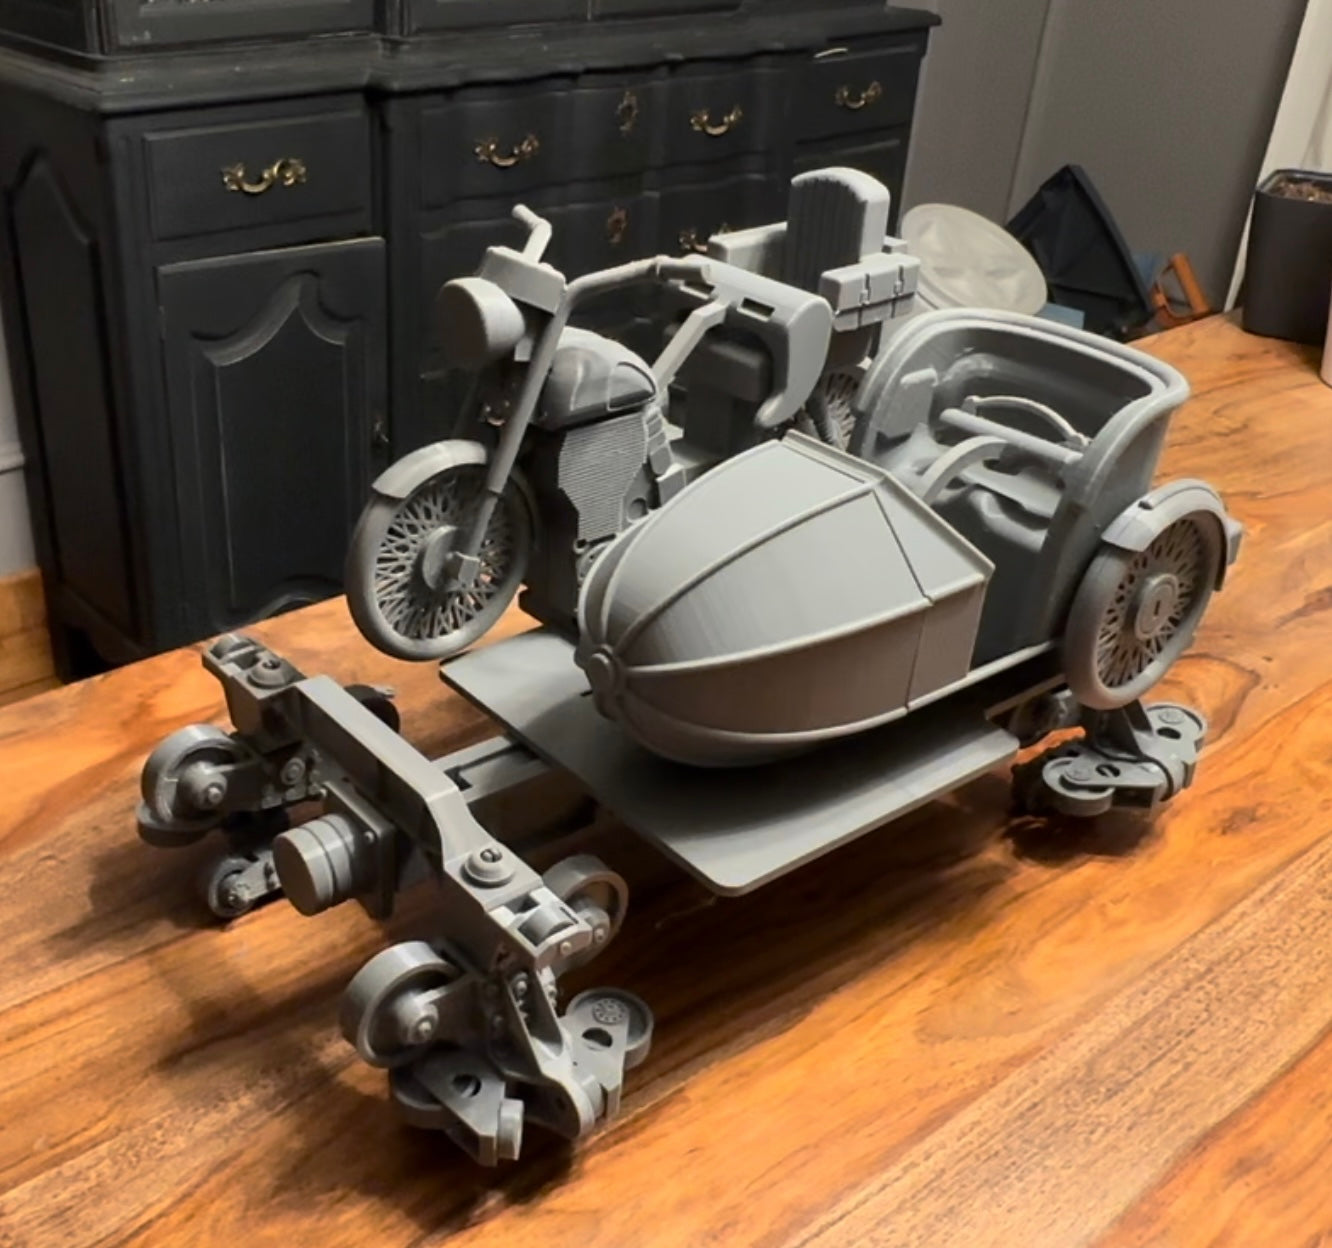 Digital Download - Motorbike Adventure 3D Printing STL Files